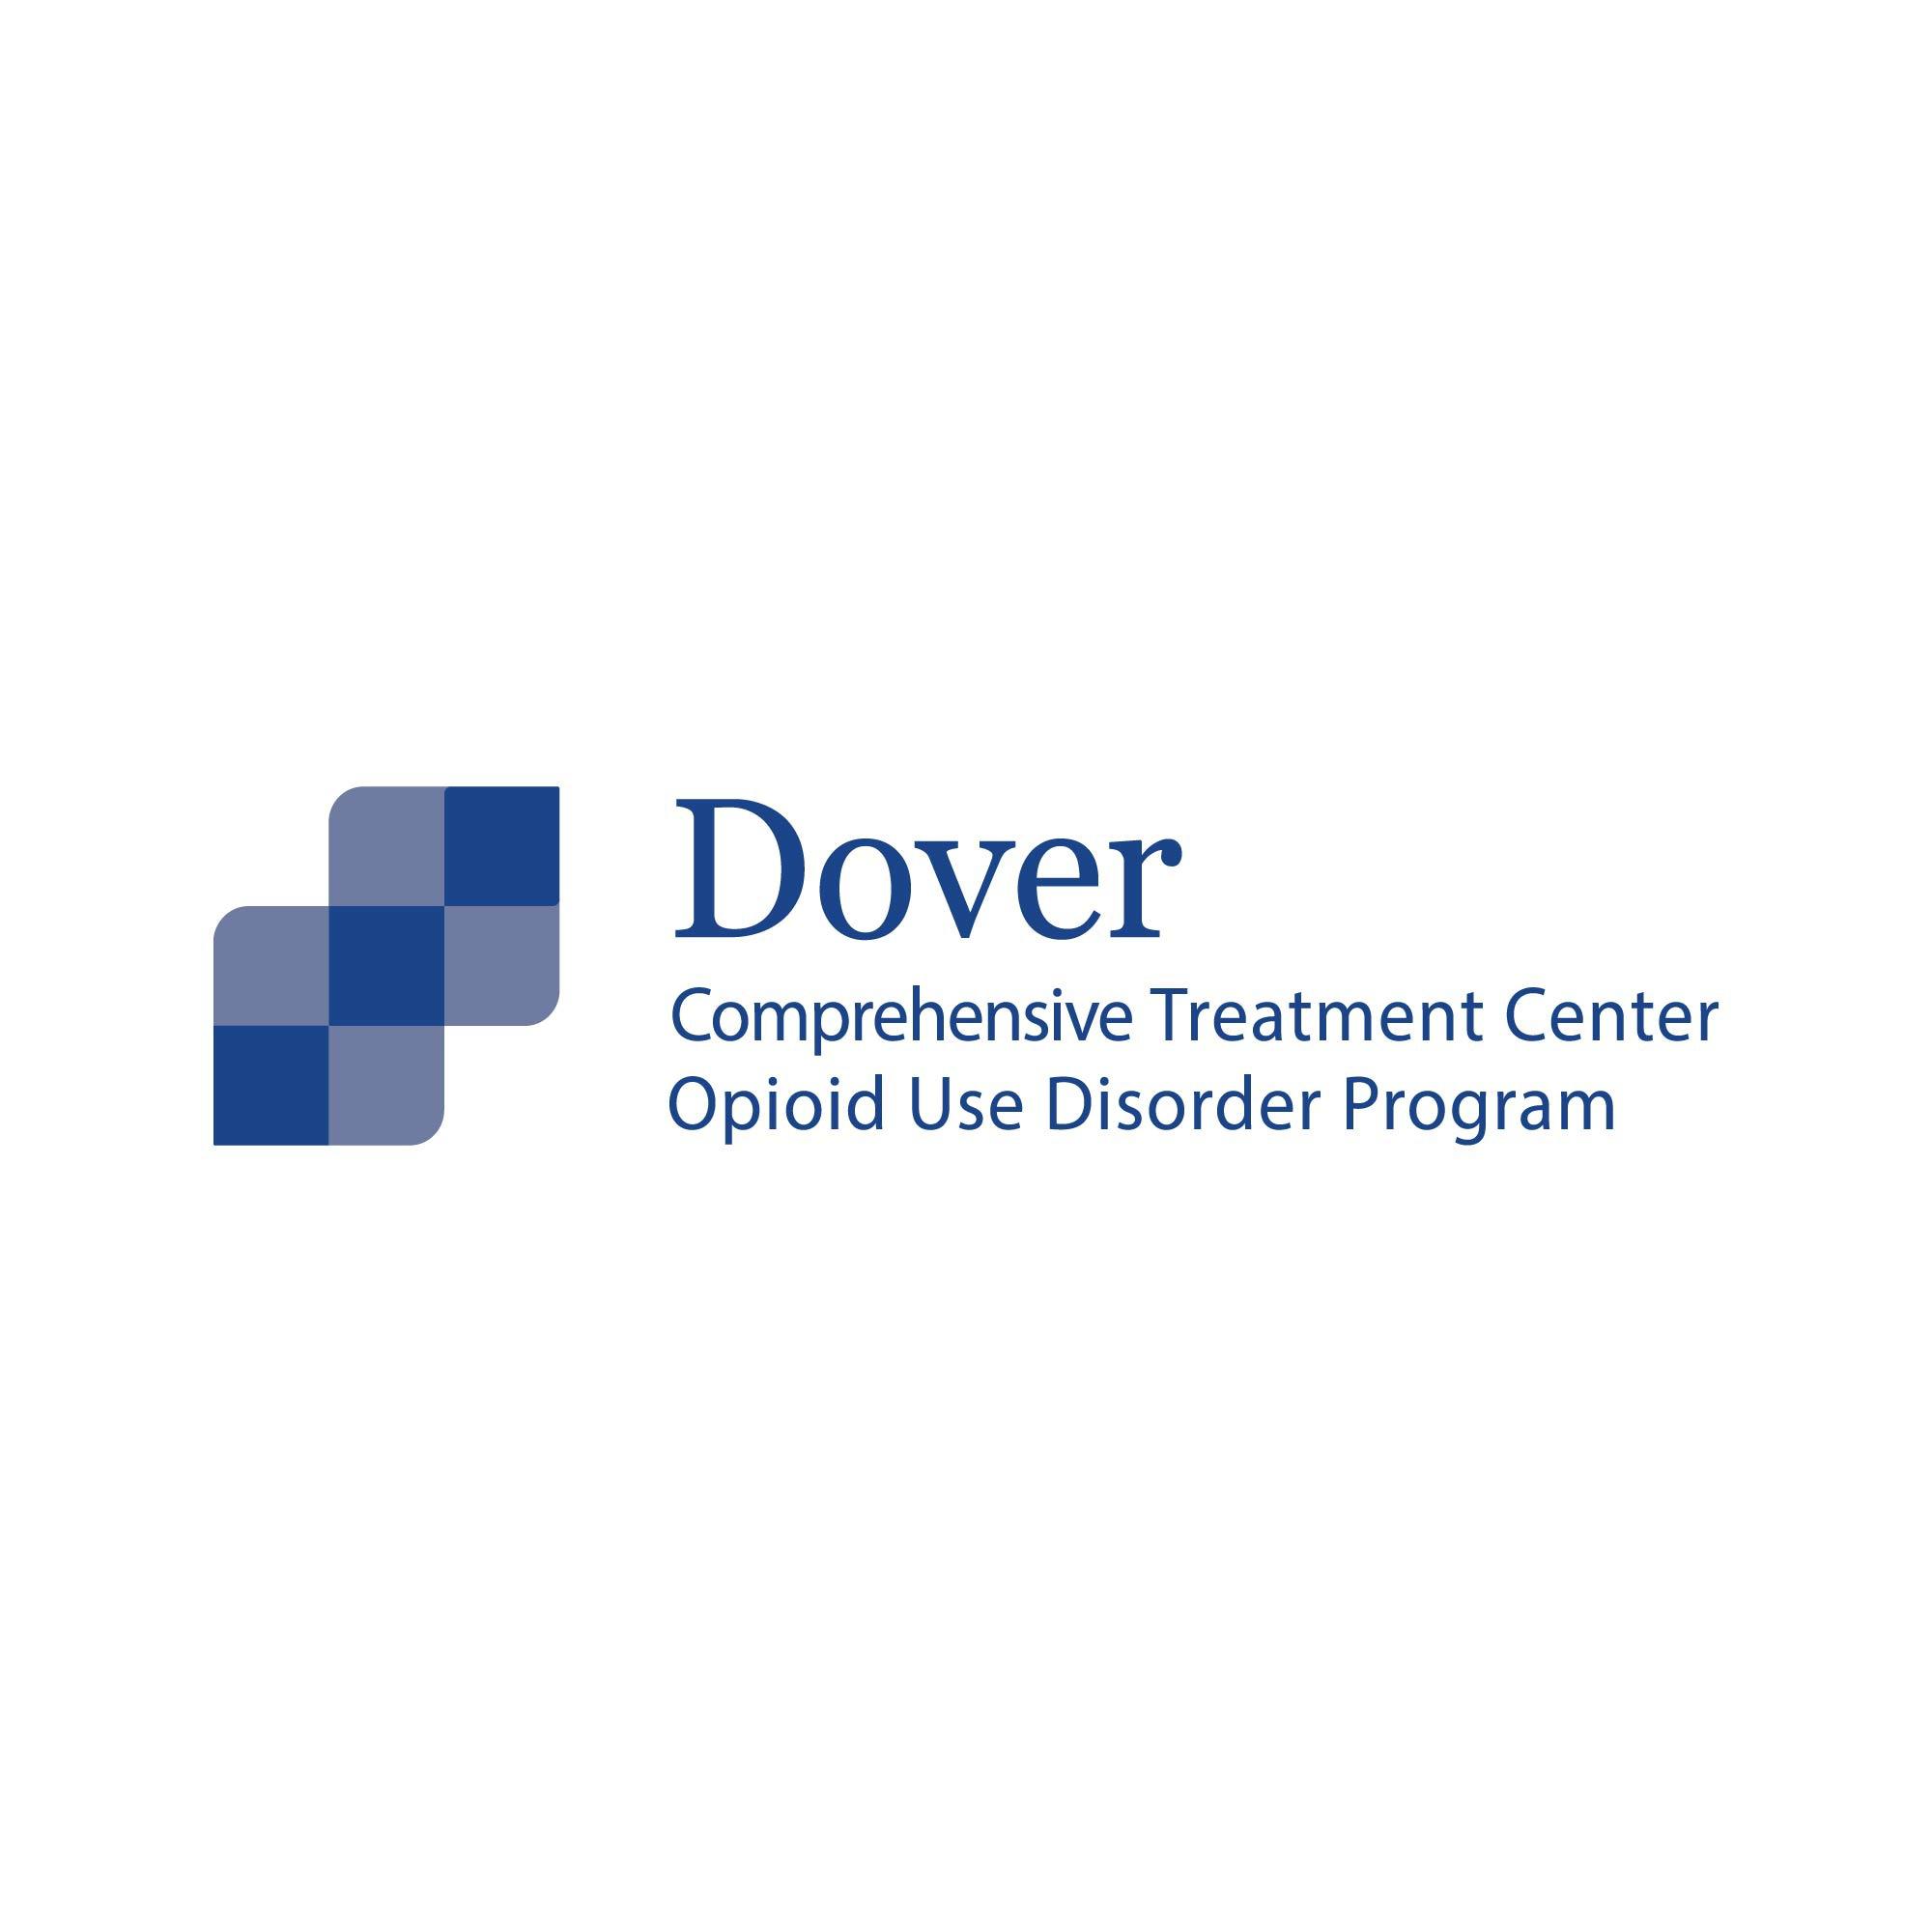 Dover Comprehensive Treatment Center